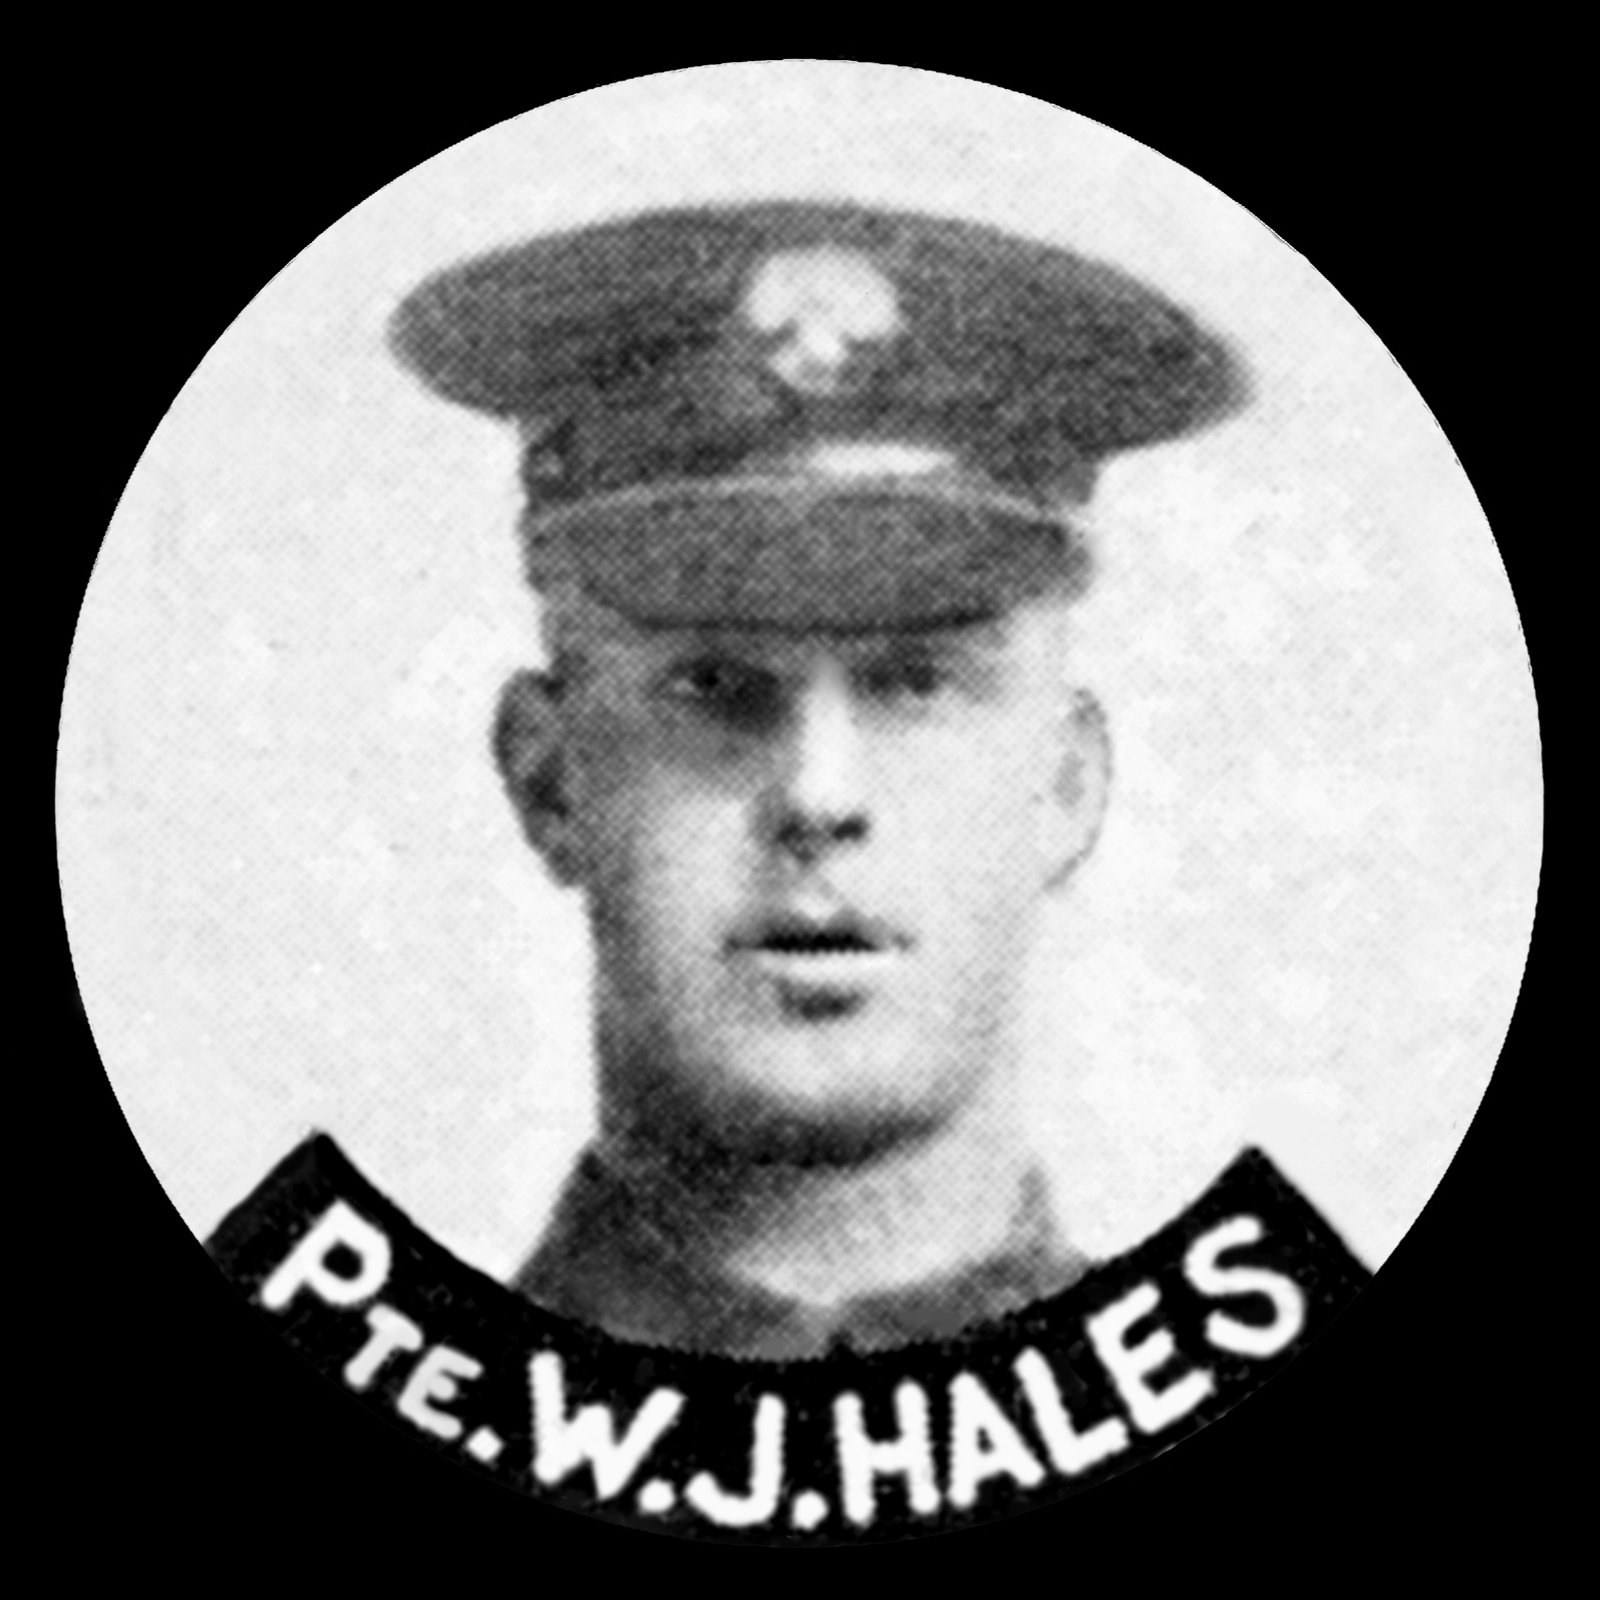 HALES Wallace John